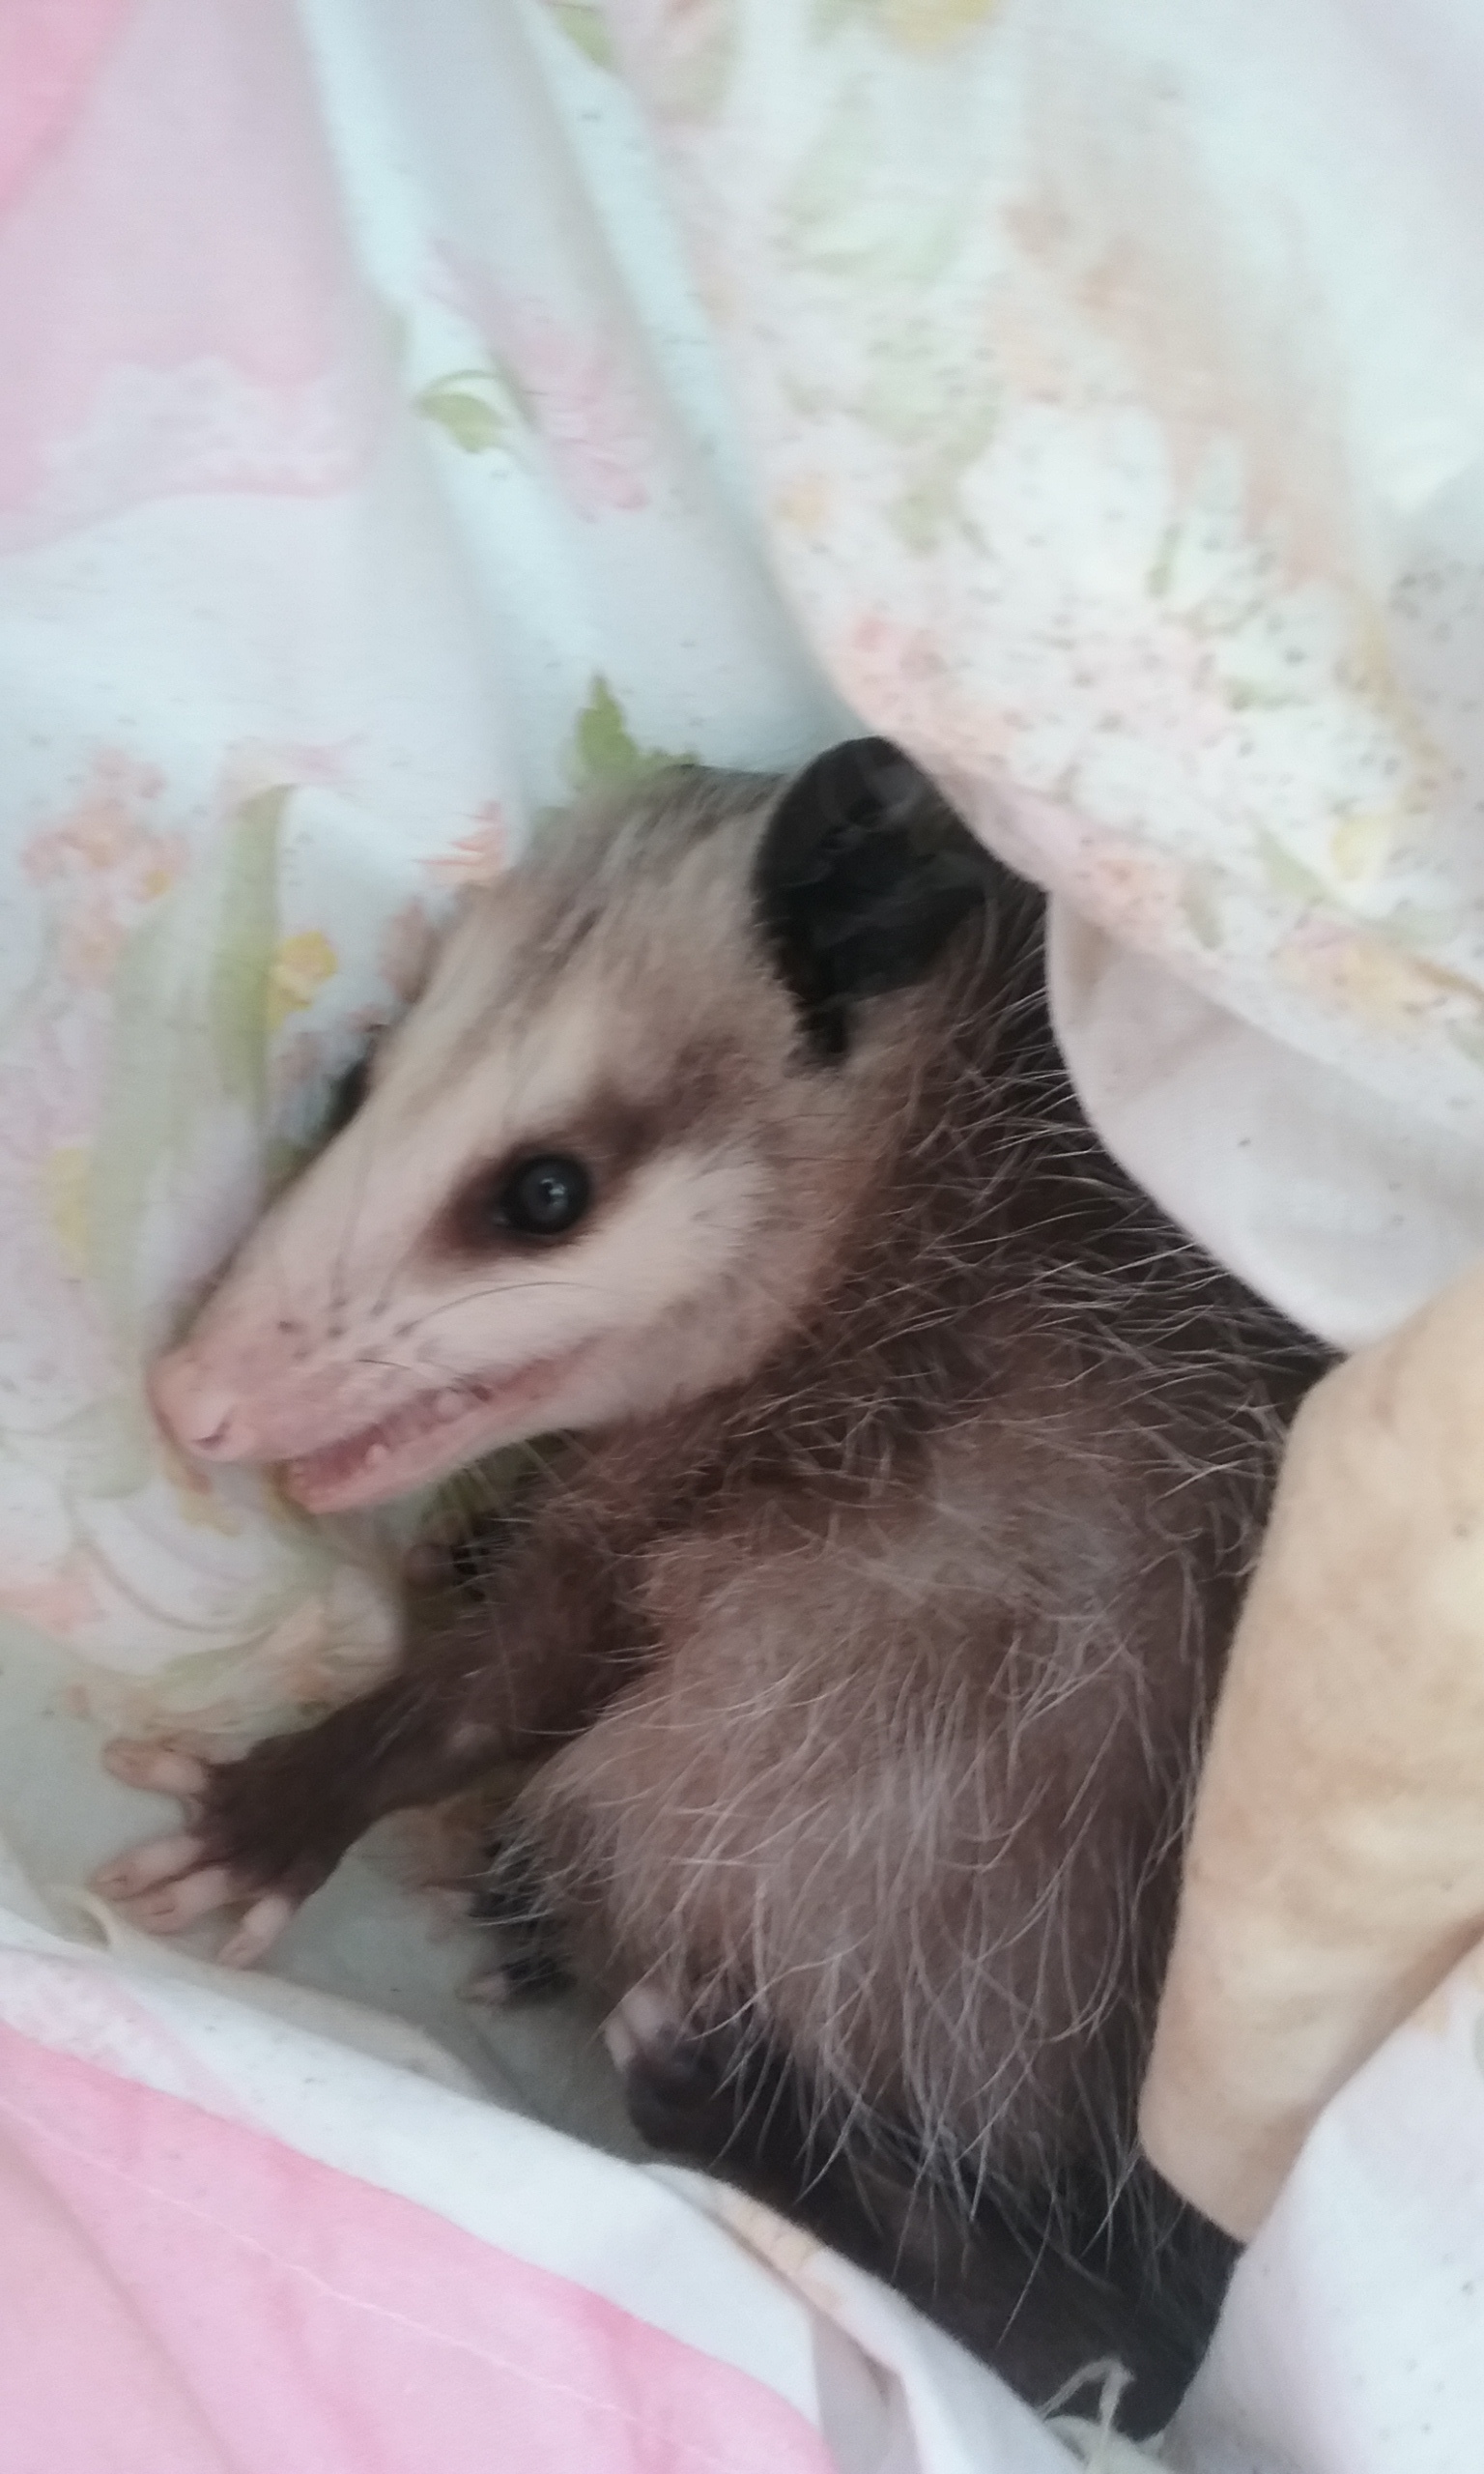 Opossums Kentucky S Only Stunning Marsupial Fox Run Environmental Education Center,Yogurt Makers At Walmart